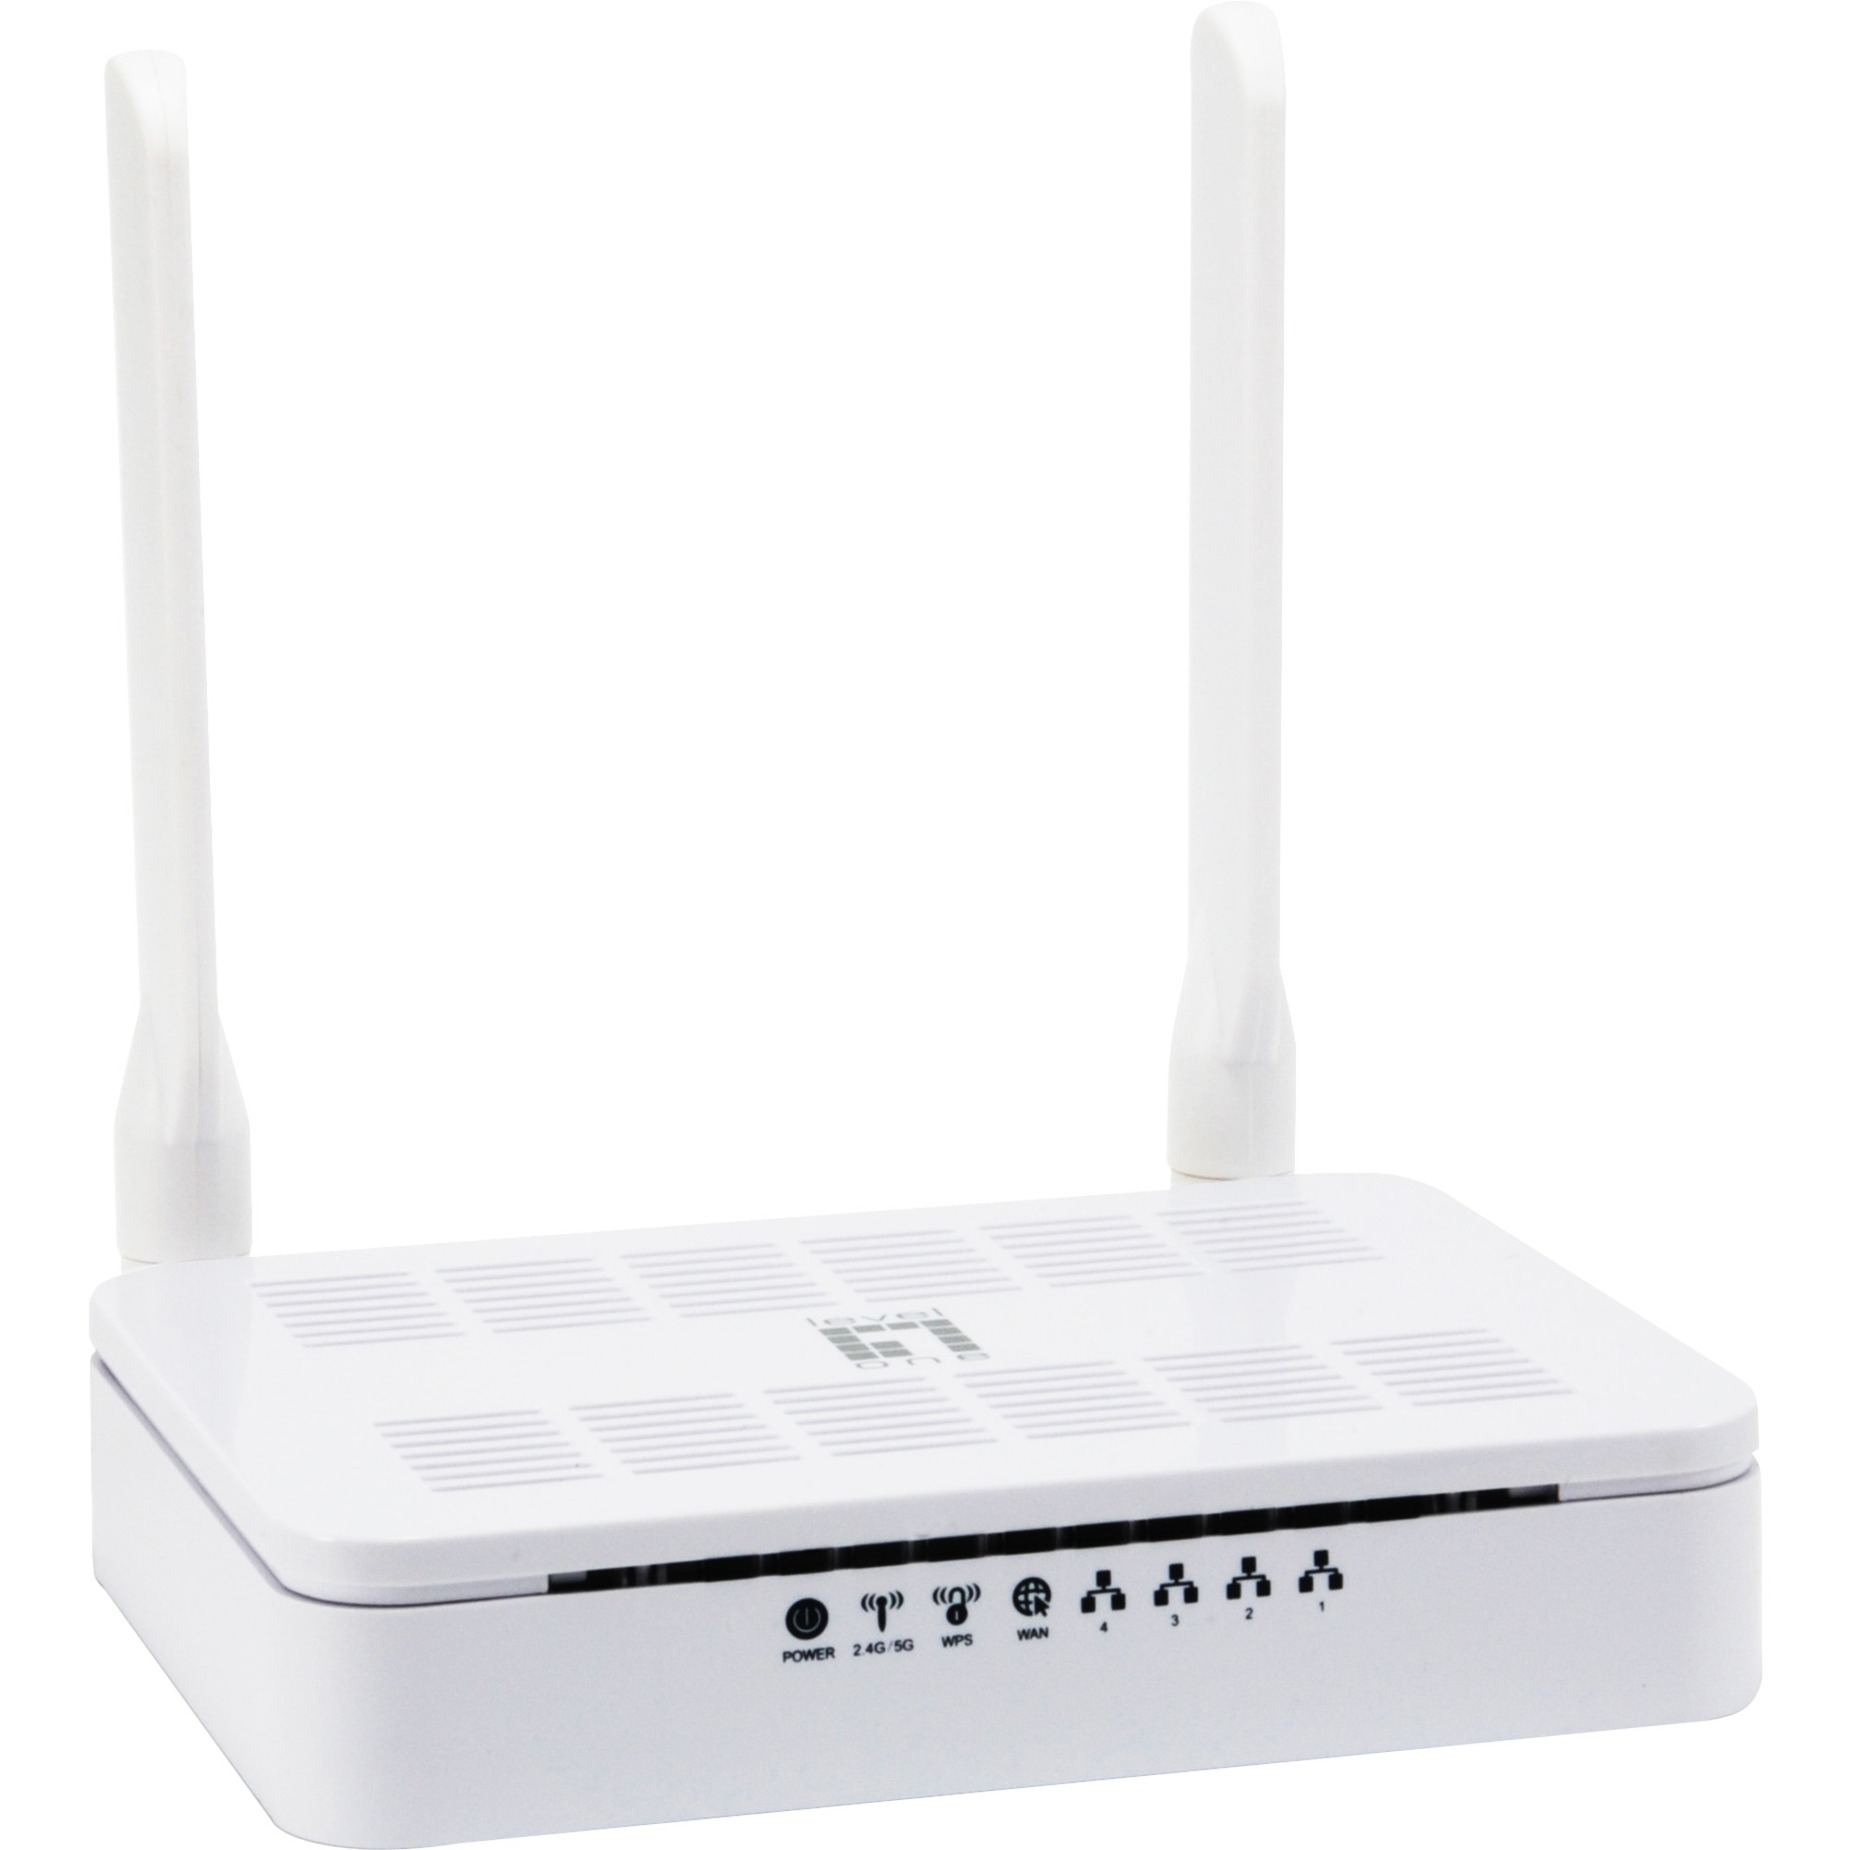 WGR-8031 router bezprzewodowy Dual-band (2.4 GHz/5 GHz) Gigabit Ethernet Bia?y